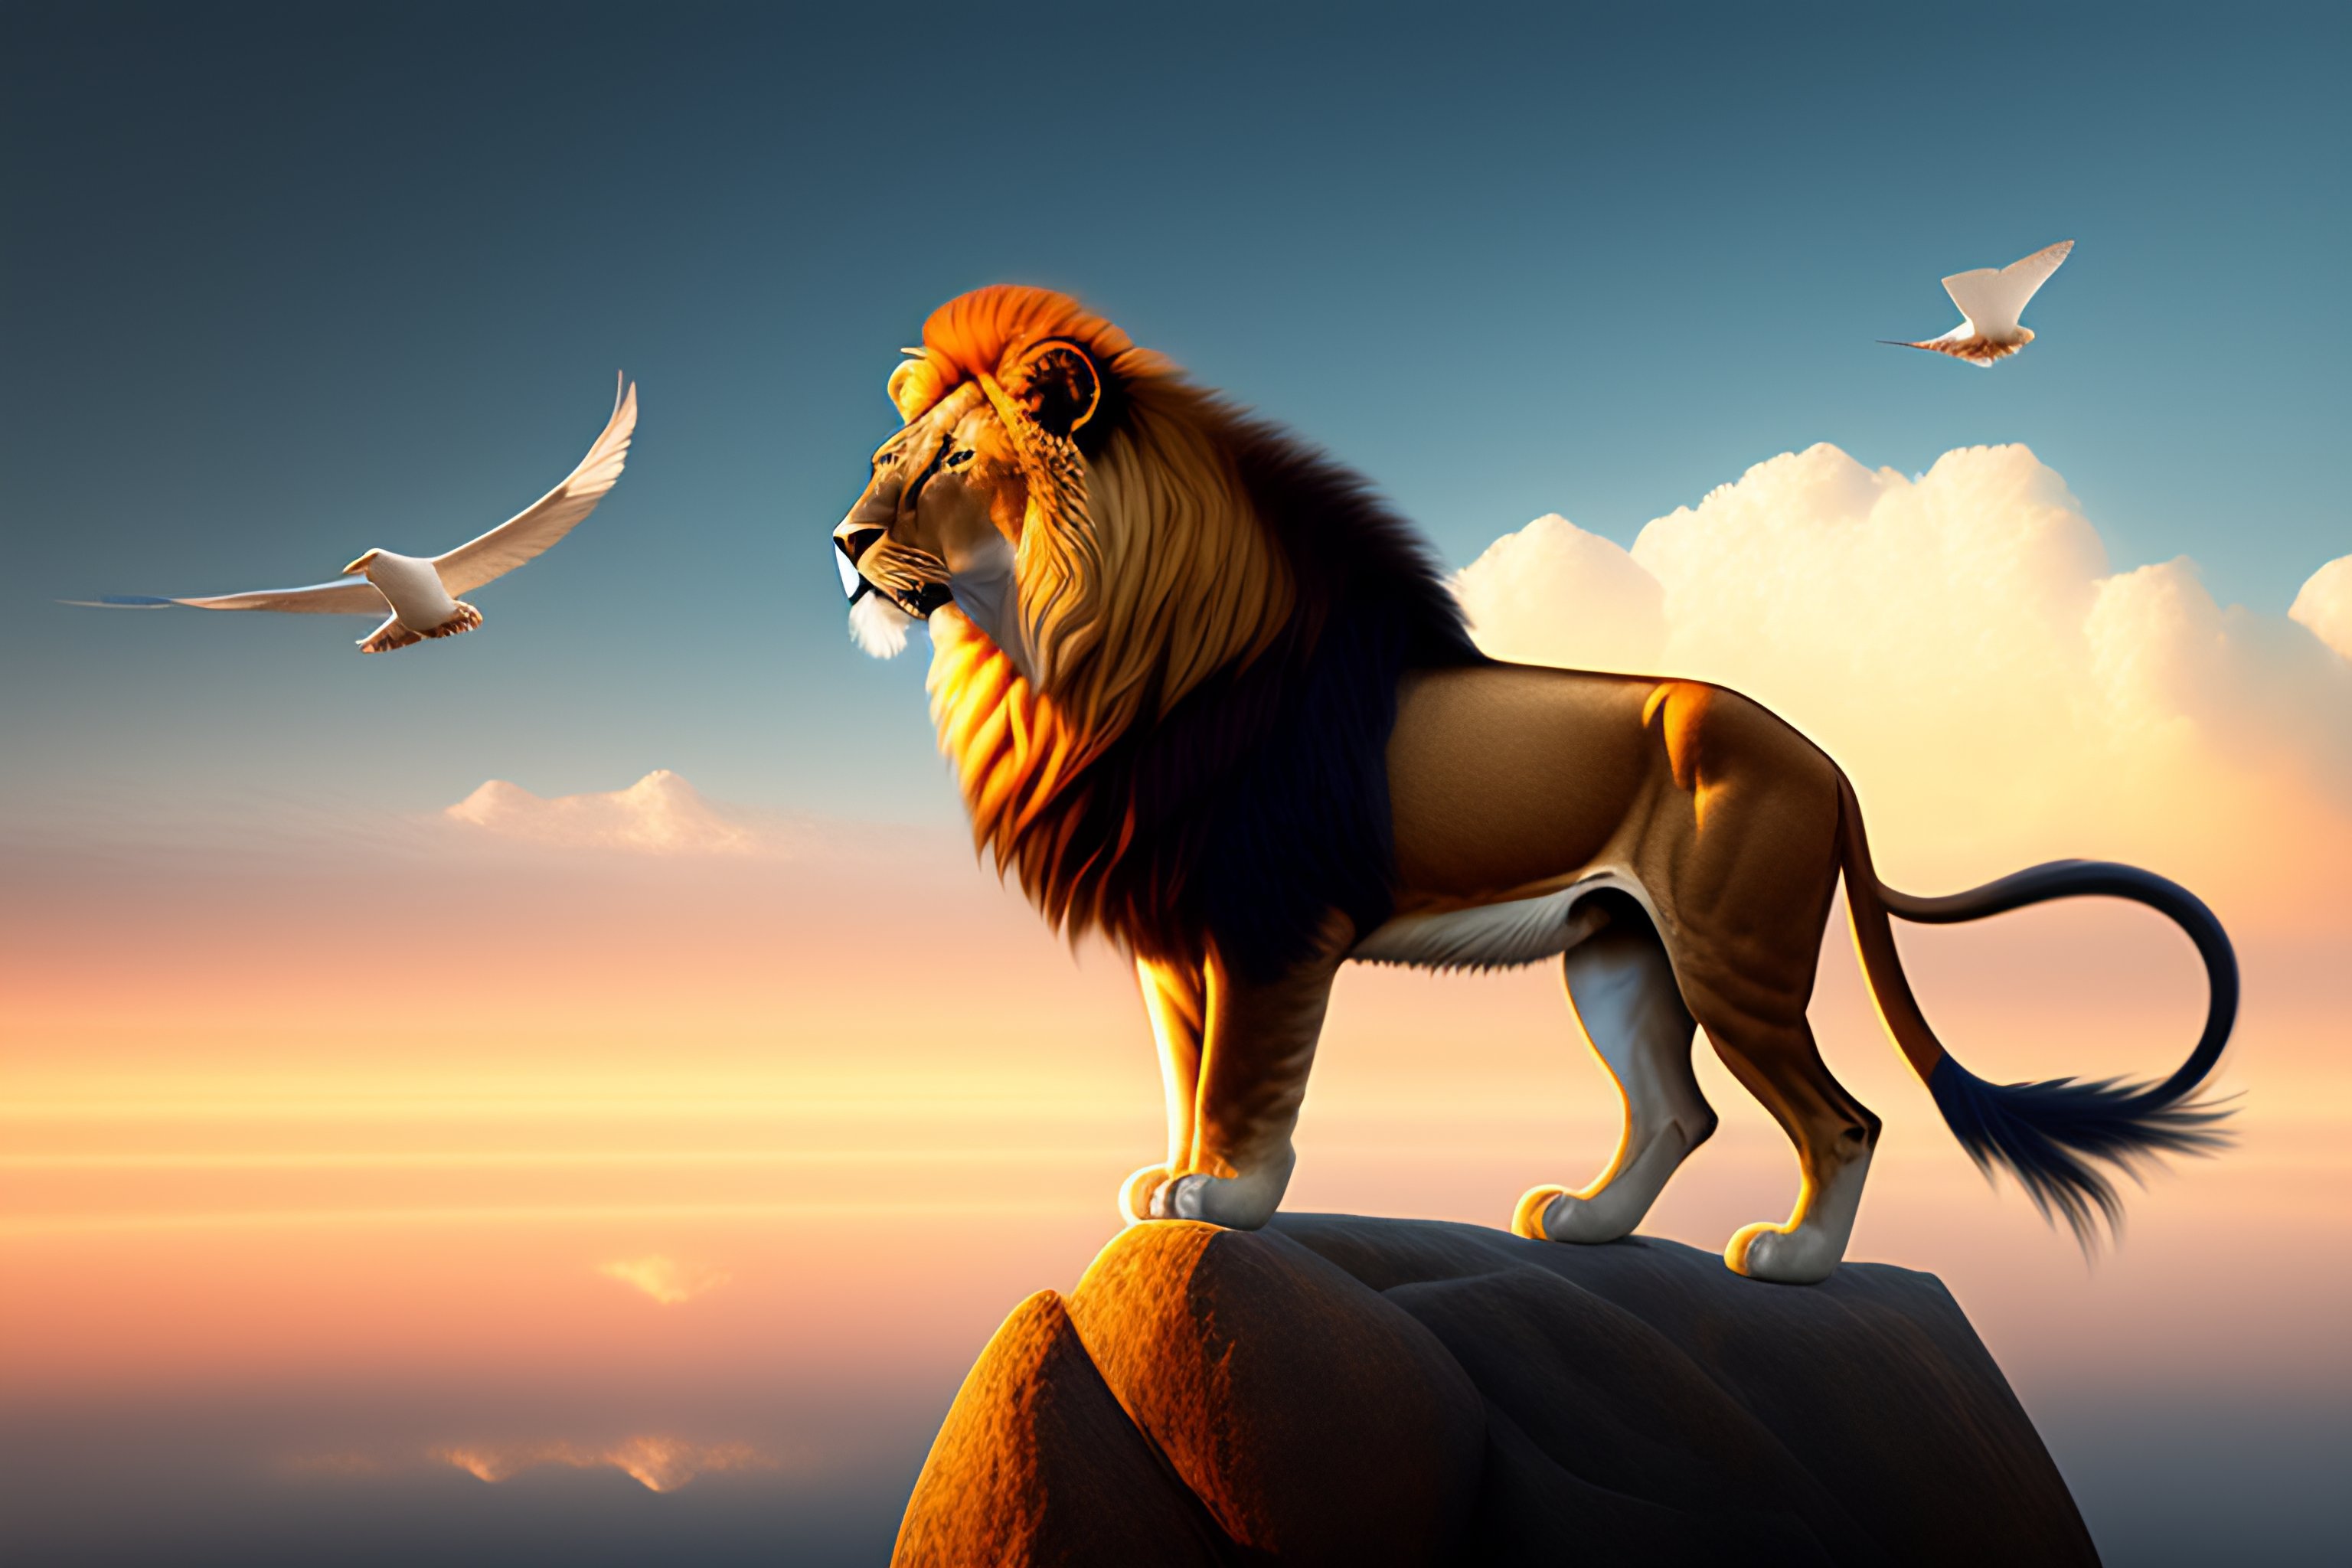 lion vs eagle